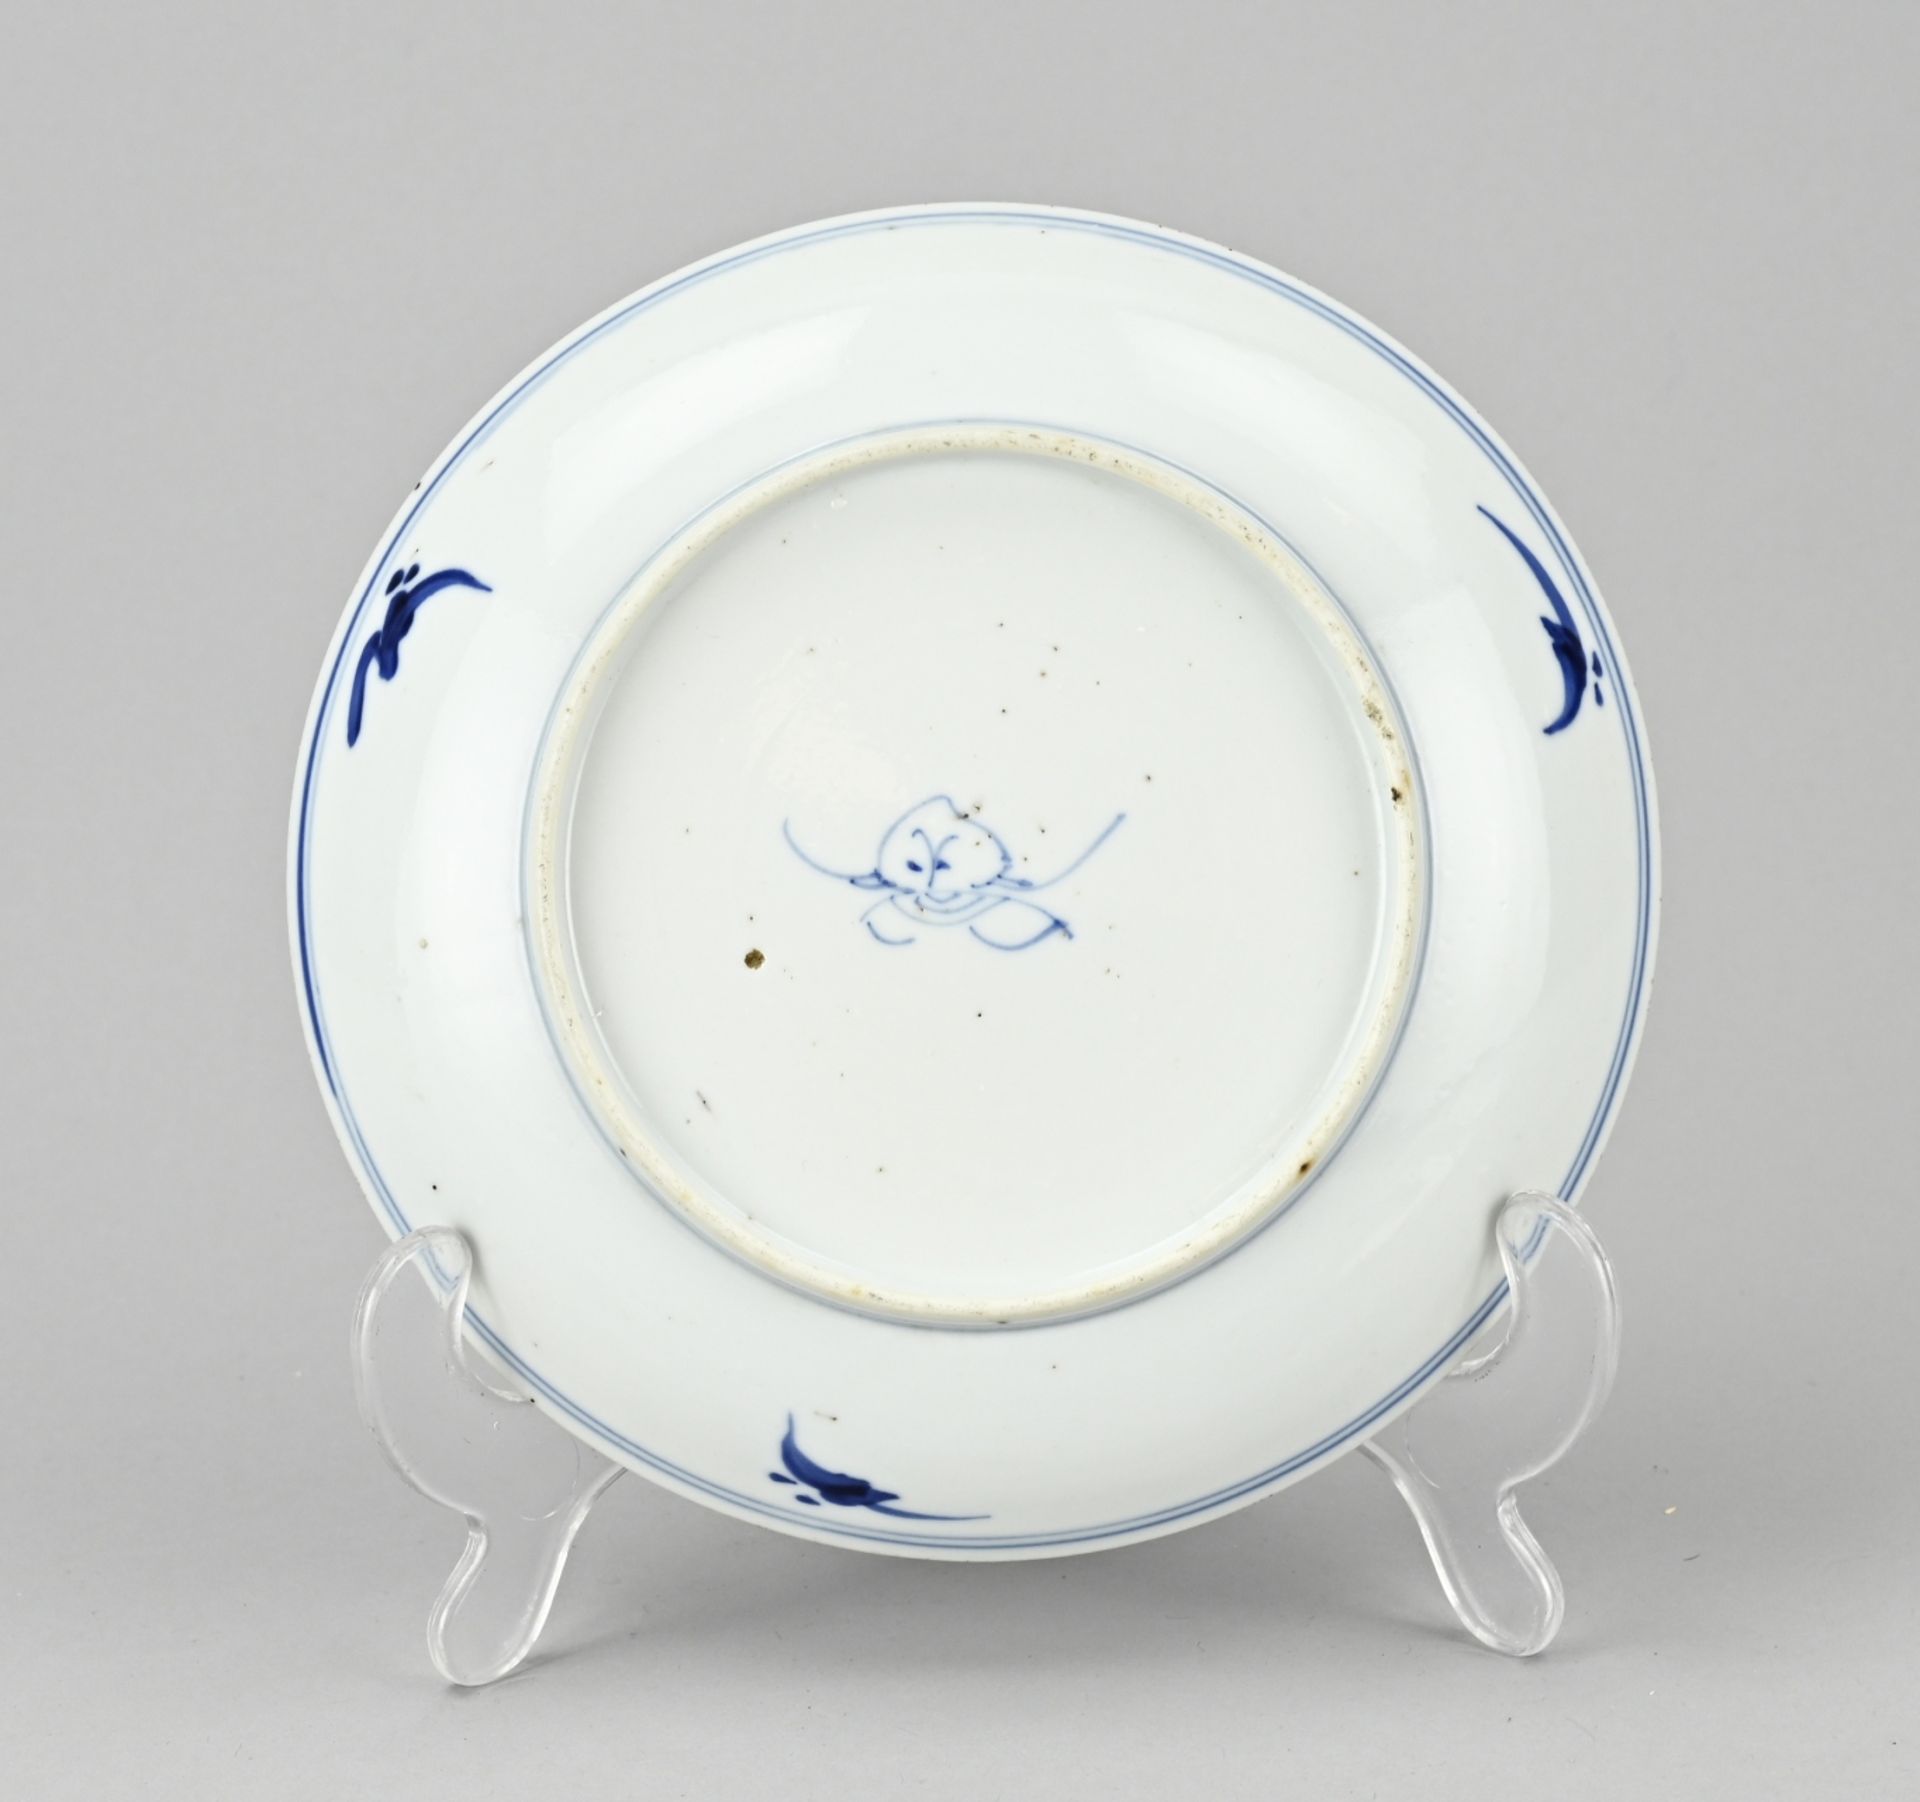 18th century plate Ã˜ 17.8 cm. - Image 2 of 2